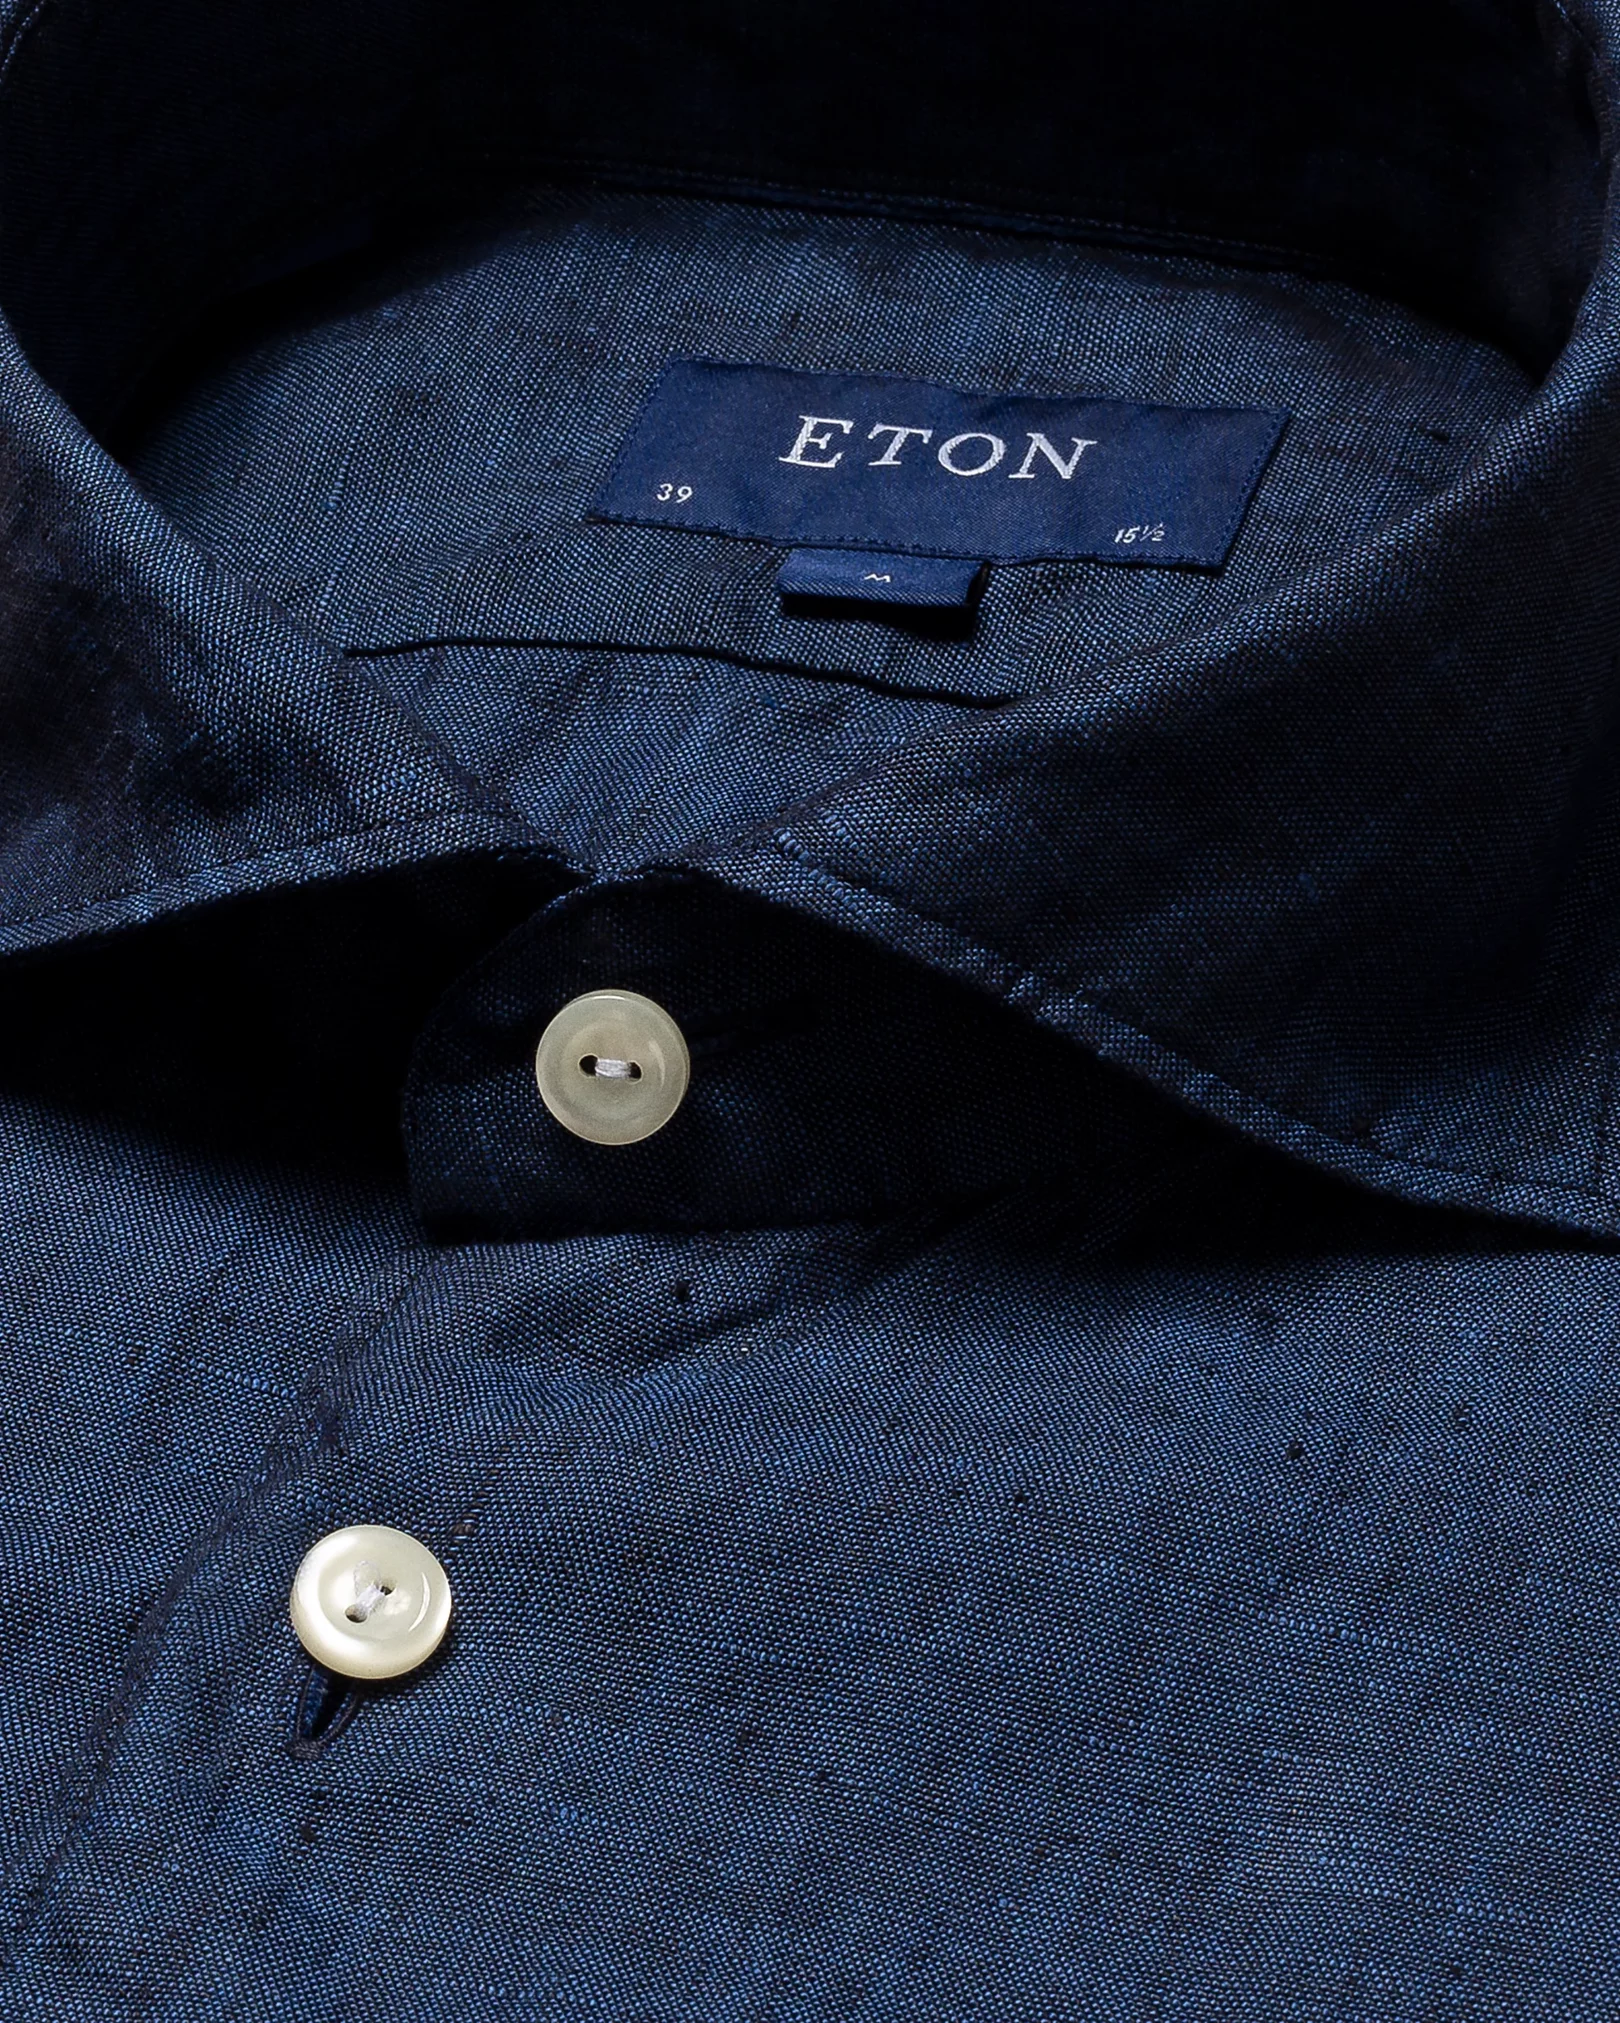 Eton - blue linen shirt wide spread